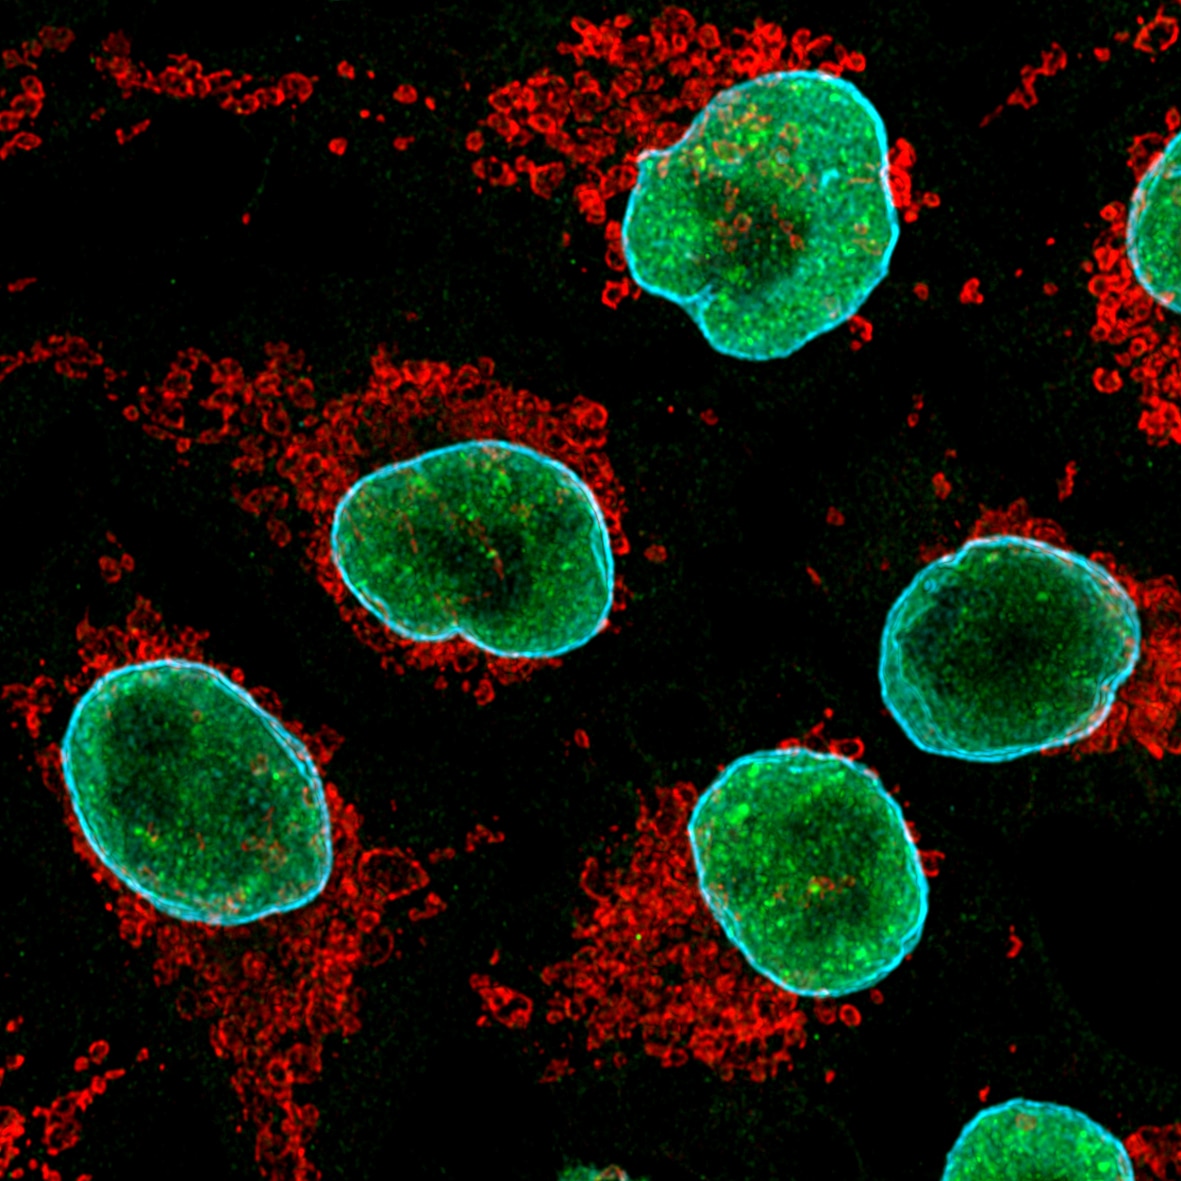 immunofluorescence staining of HeLa cells with TDP43 antibody,] and Lamin B1 antibody